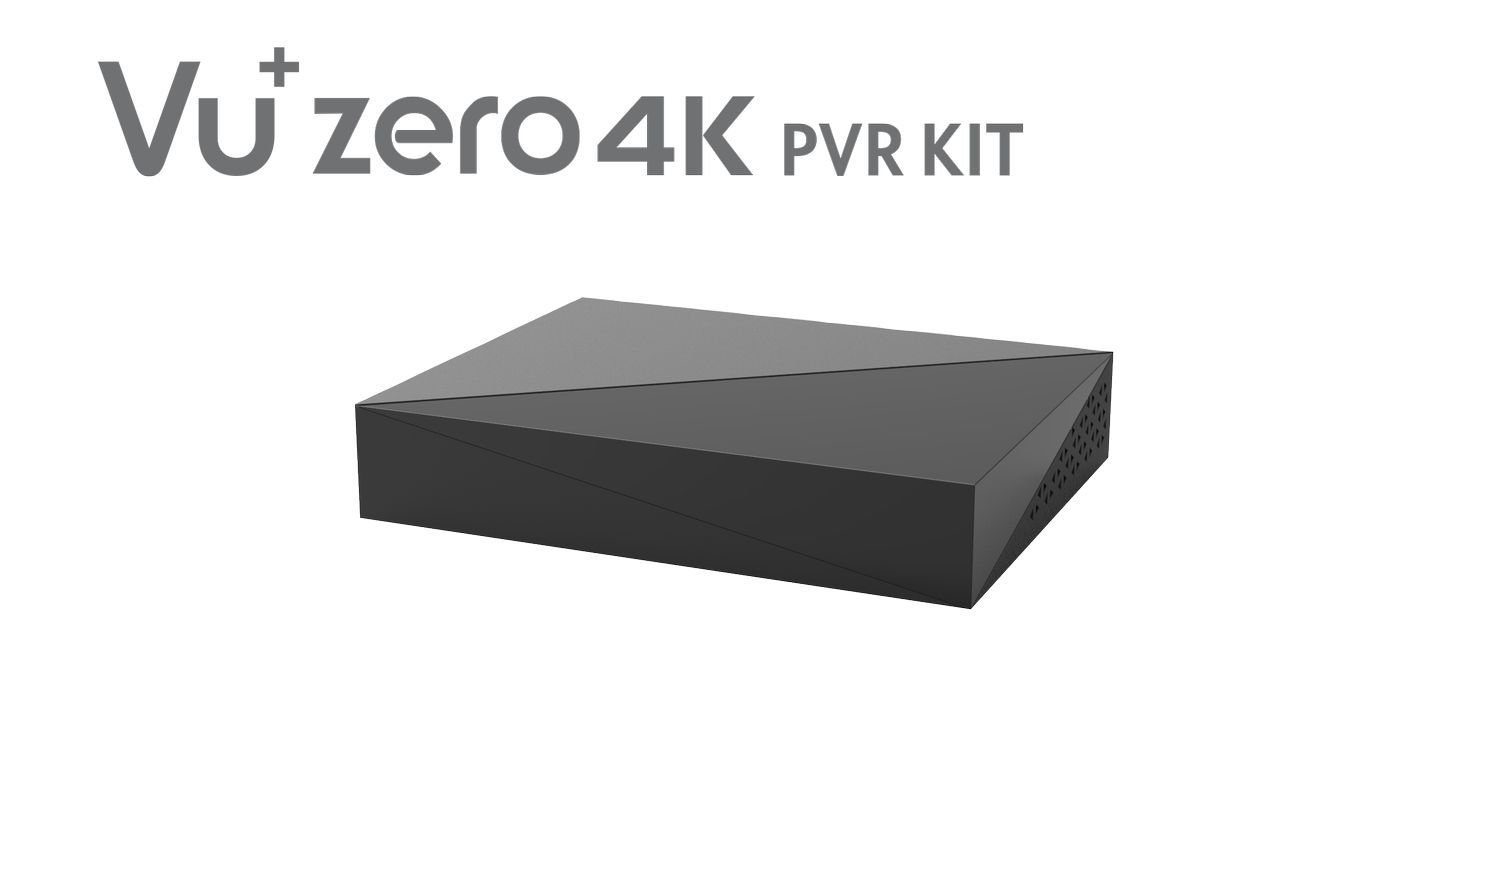 VU+ VU+ Zero 4K PVR Inklusive Tuner Kit schwarz HDD, 500GB